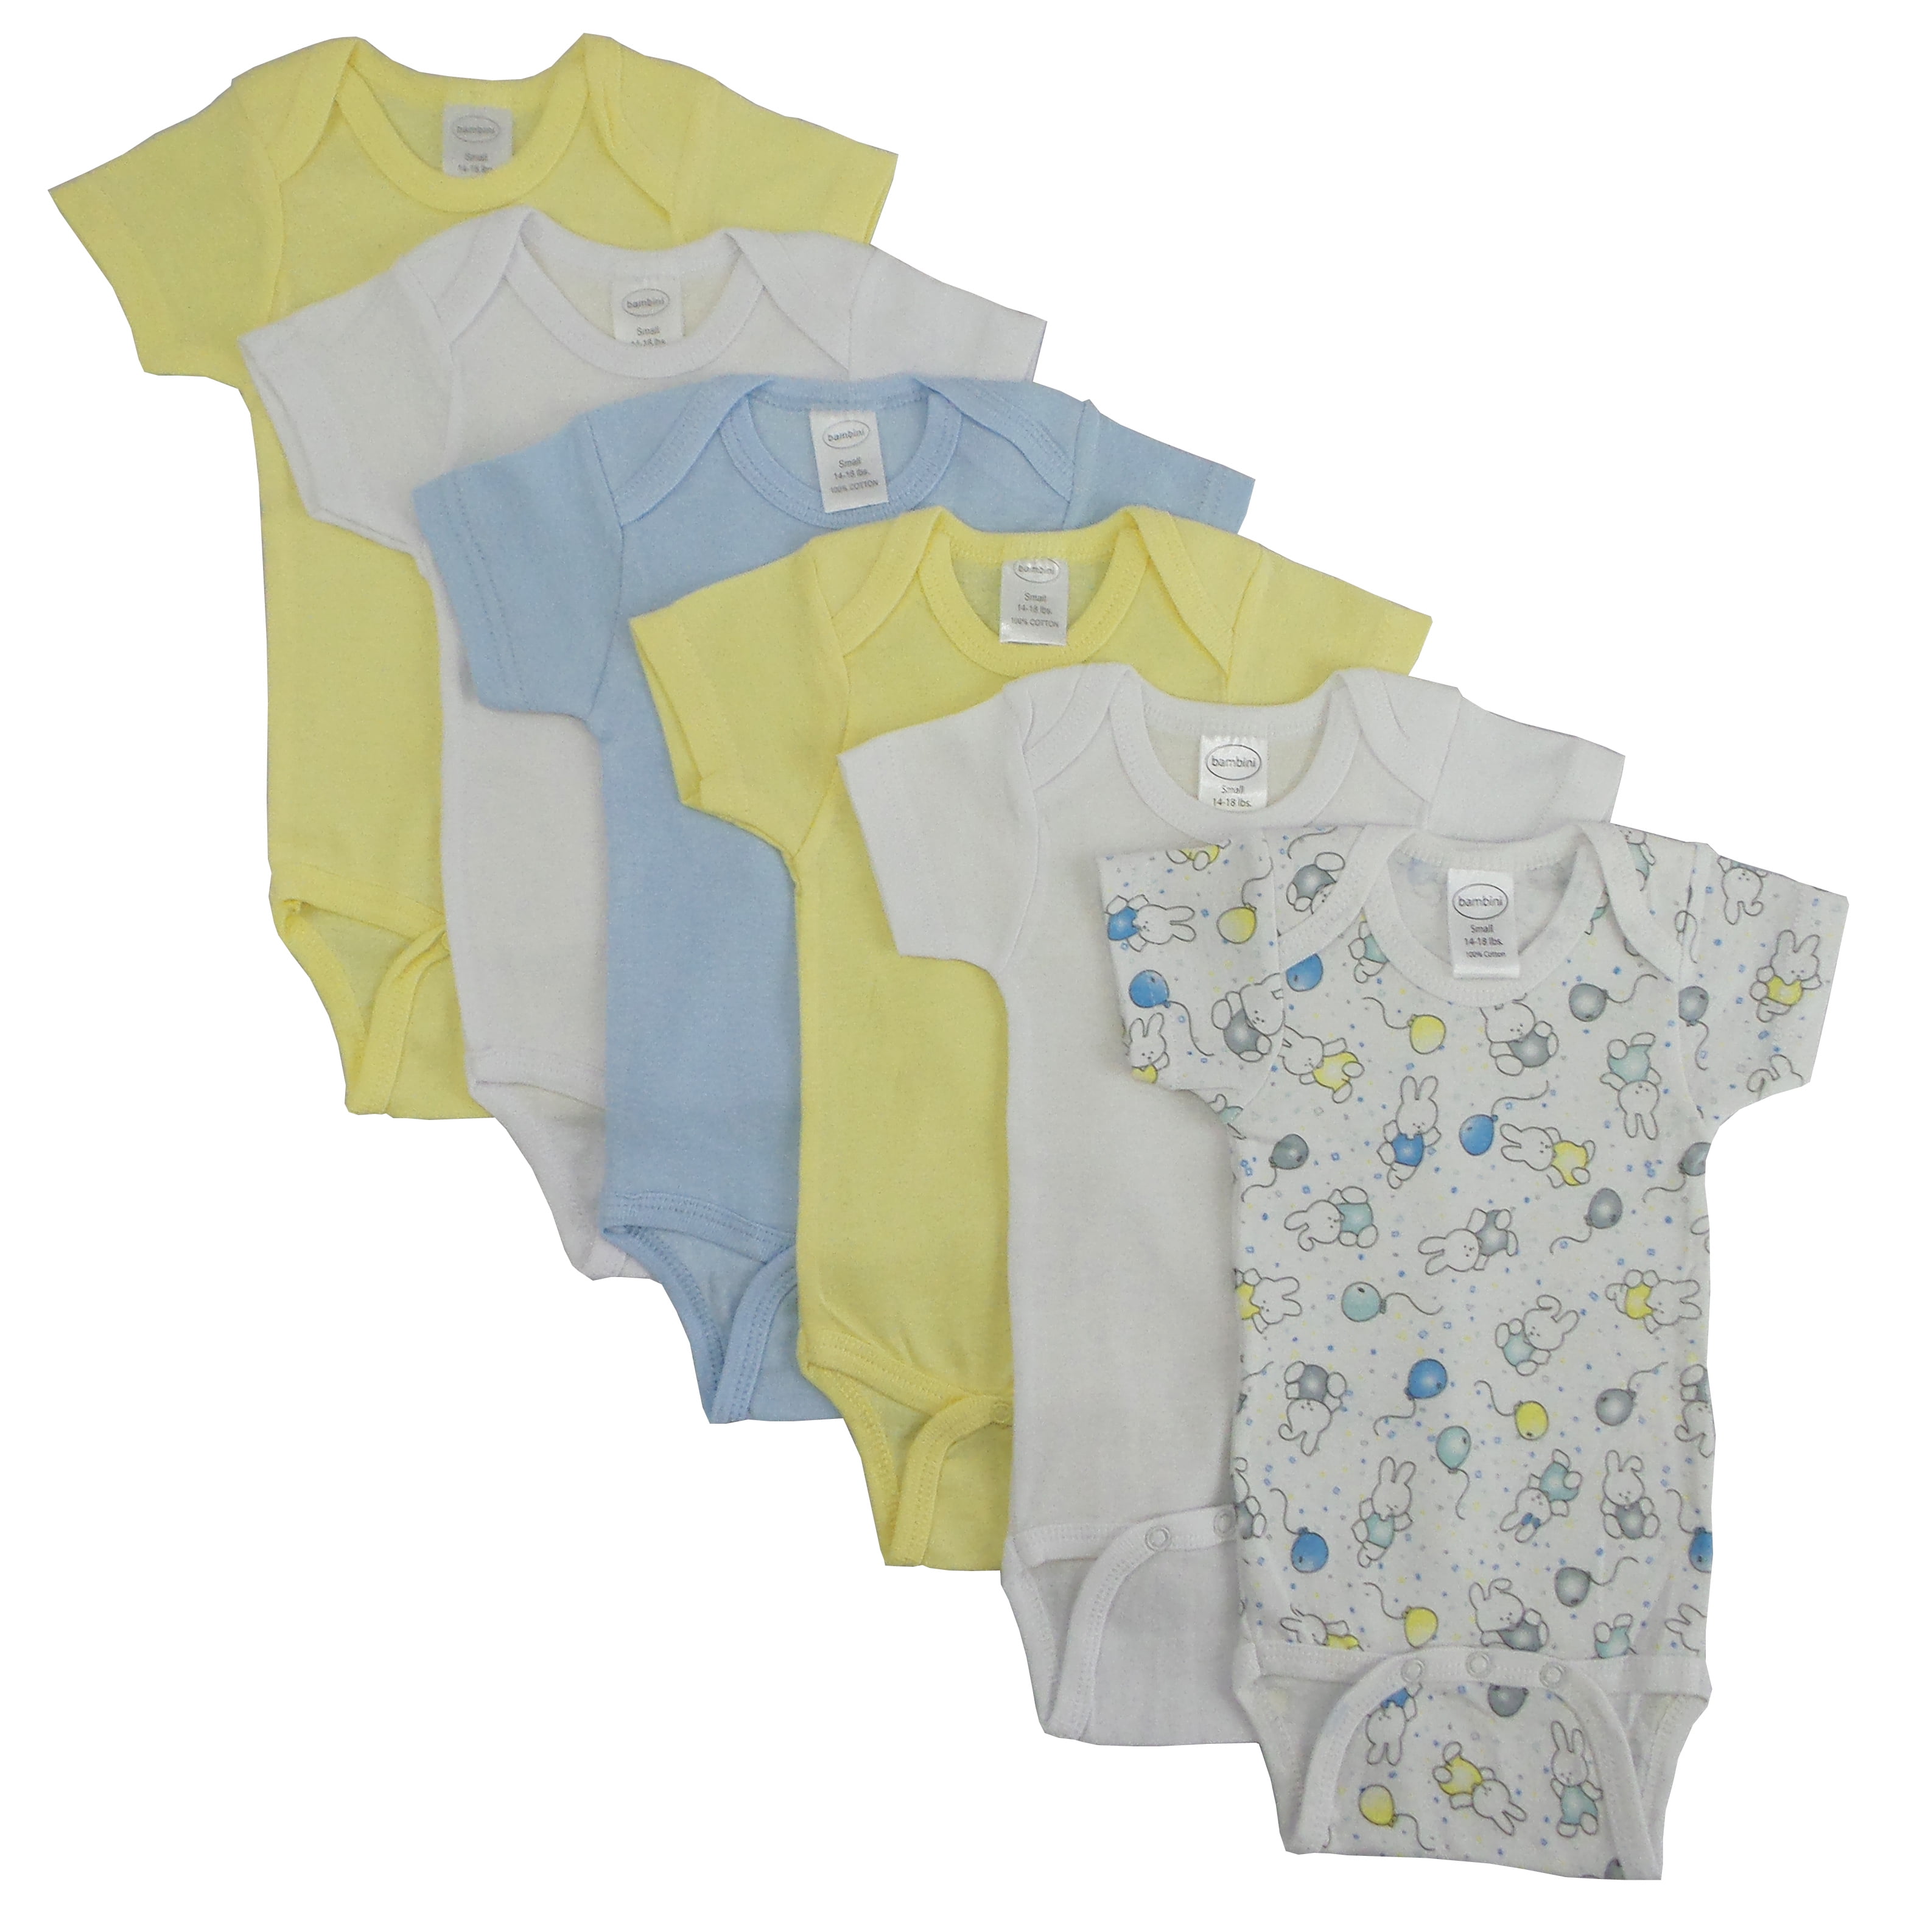 Cs-002nb-004nb Pastel Boys Short Sleeve With Printed, Assorted - Newborn